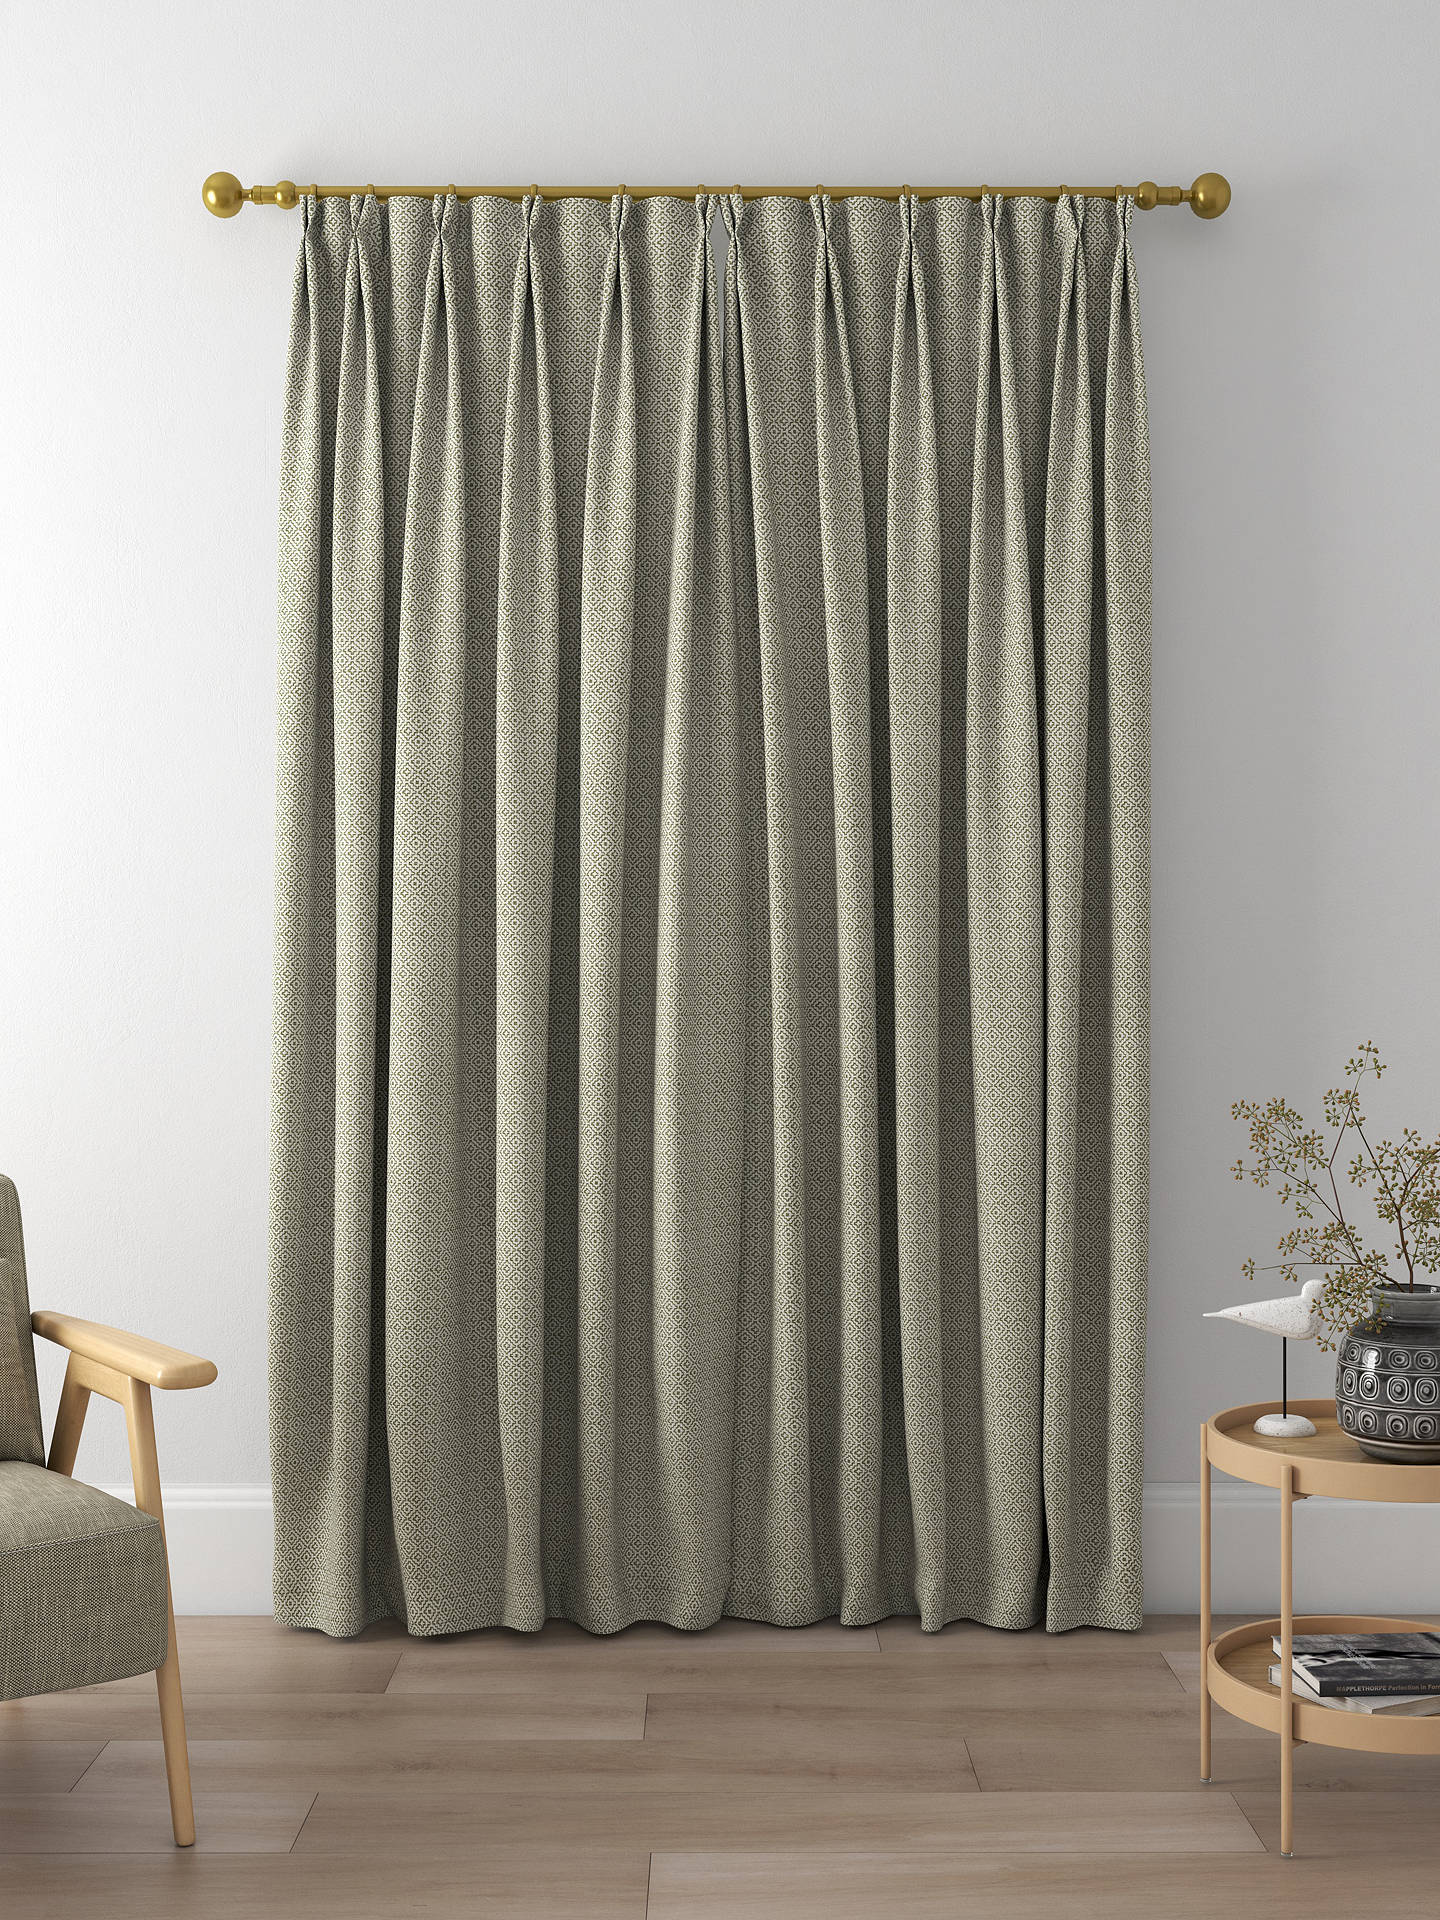 Sanderson Linden Made to Measure Curtains, Celadon